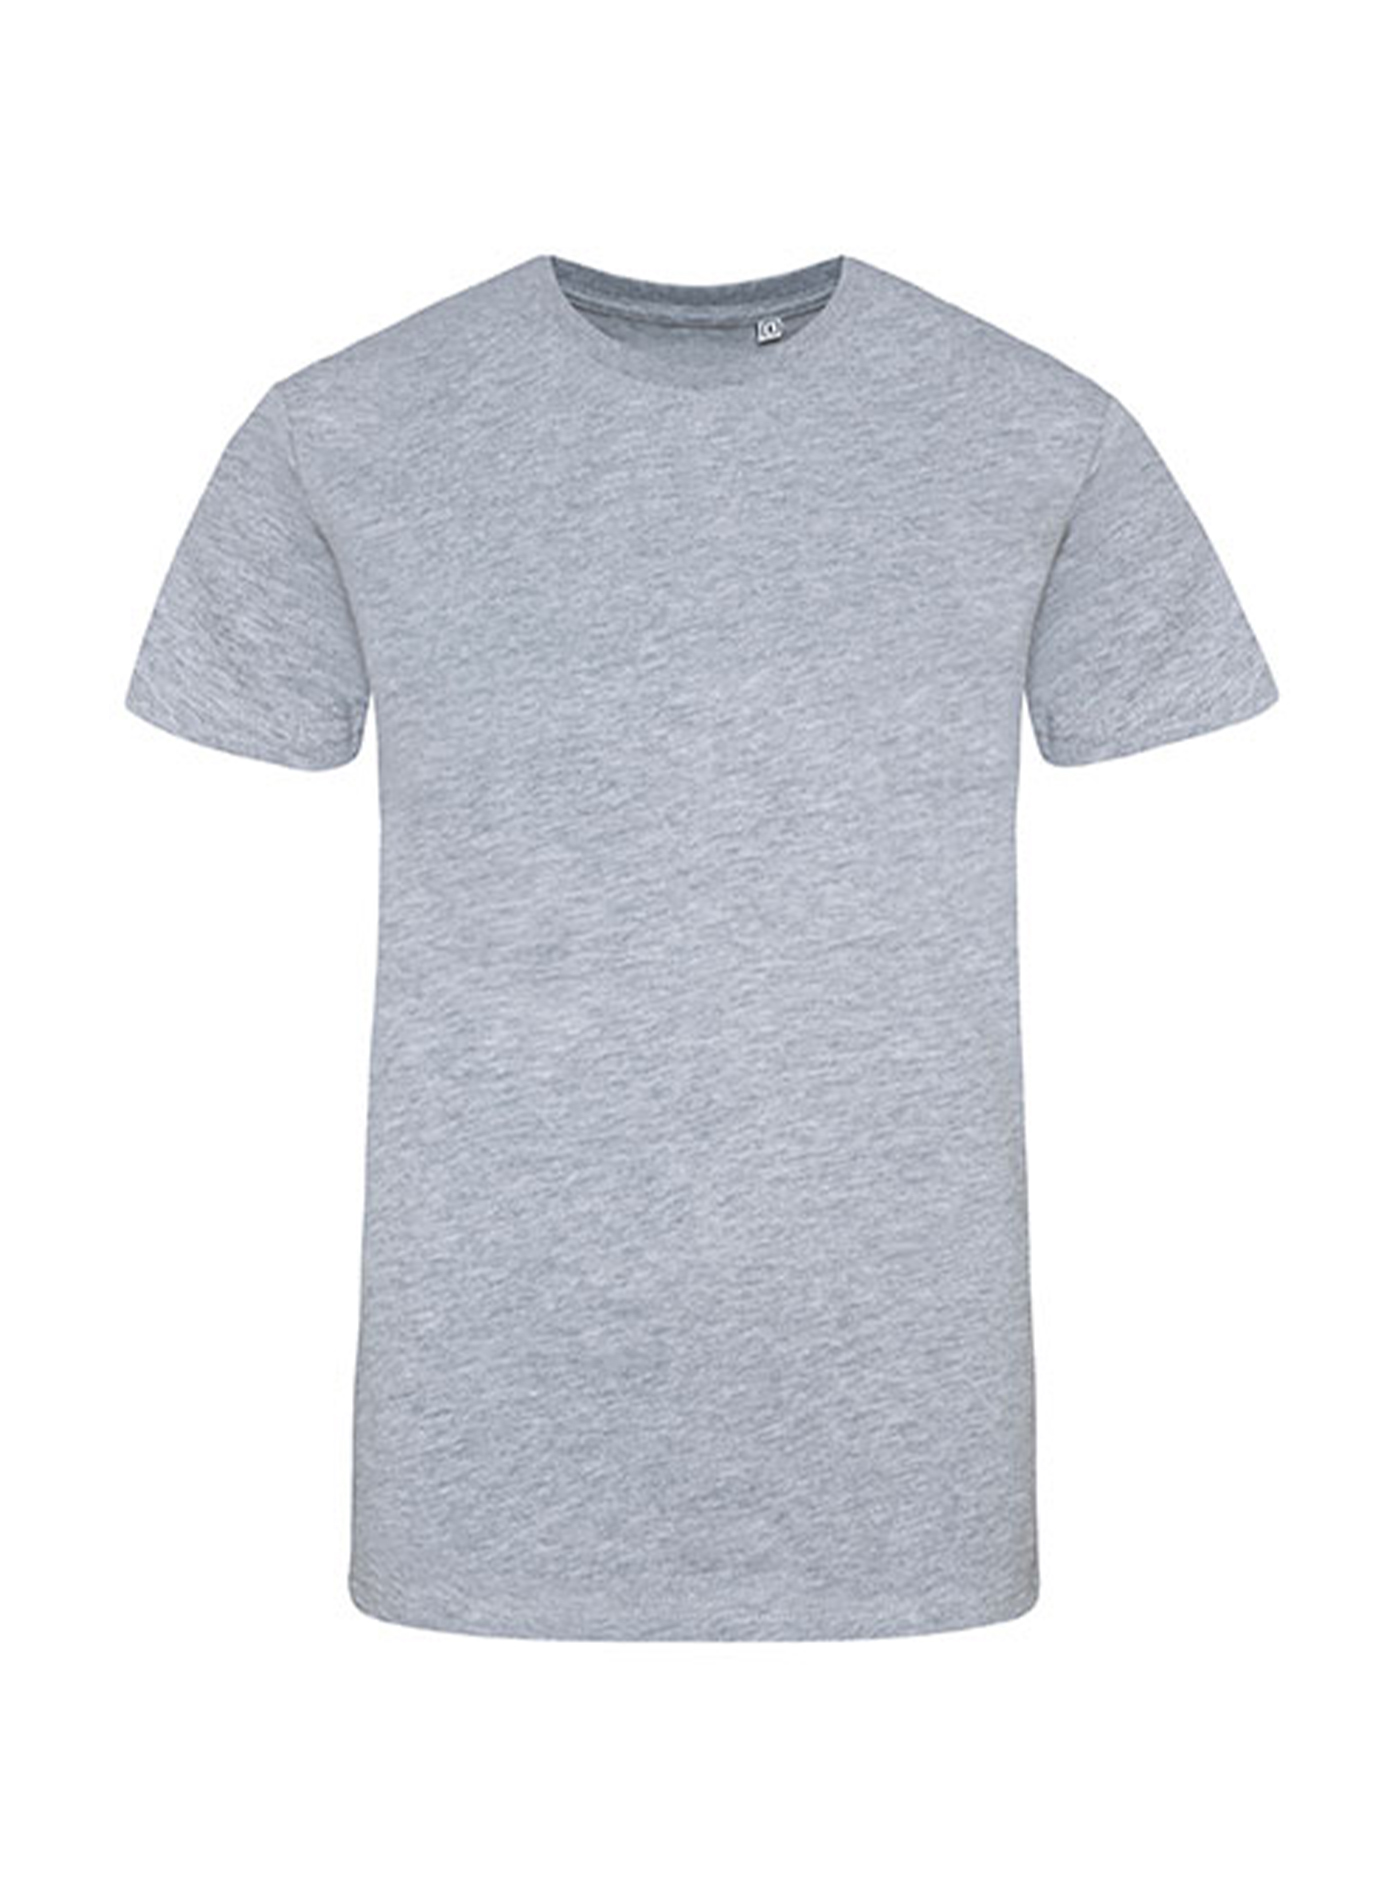 Pánské tričko Just Ts - Šedý melír XL